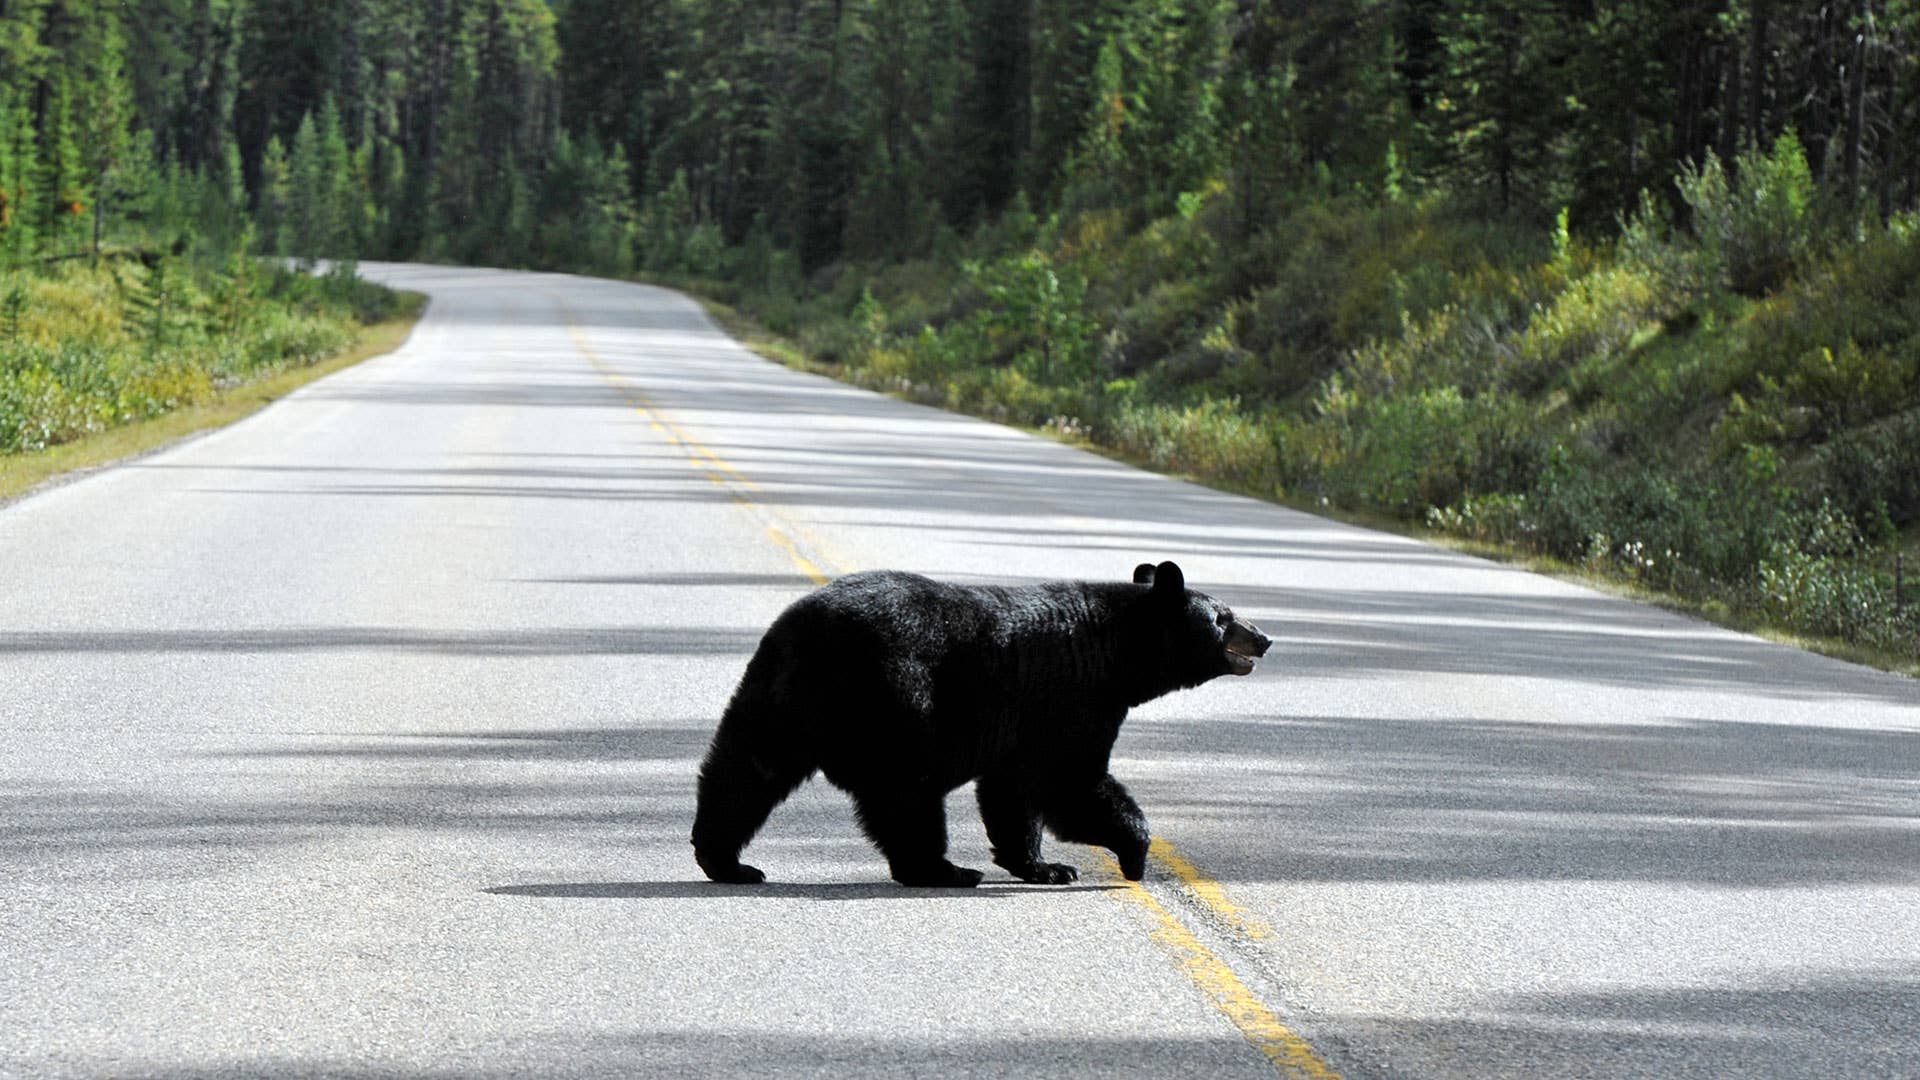 A black bear crosses the road.